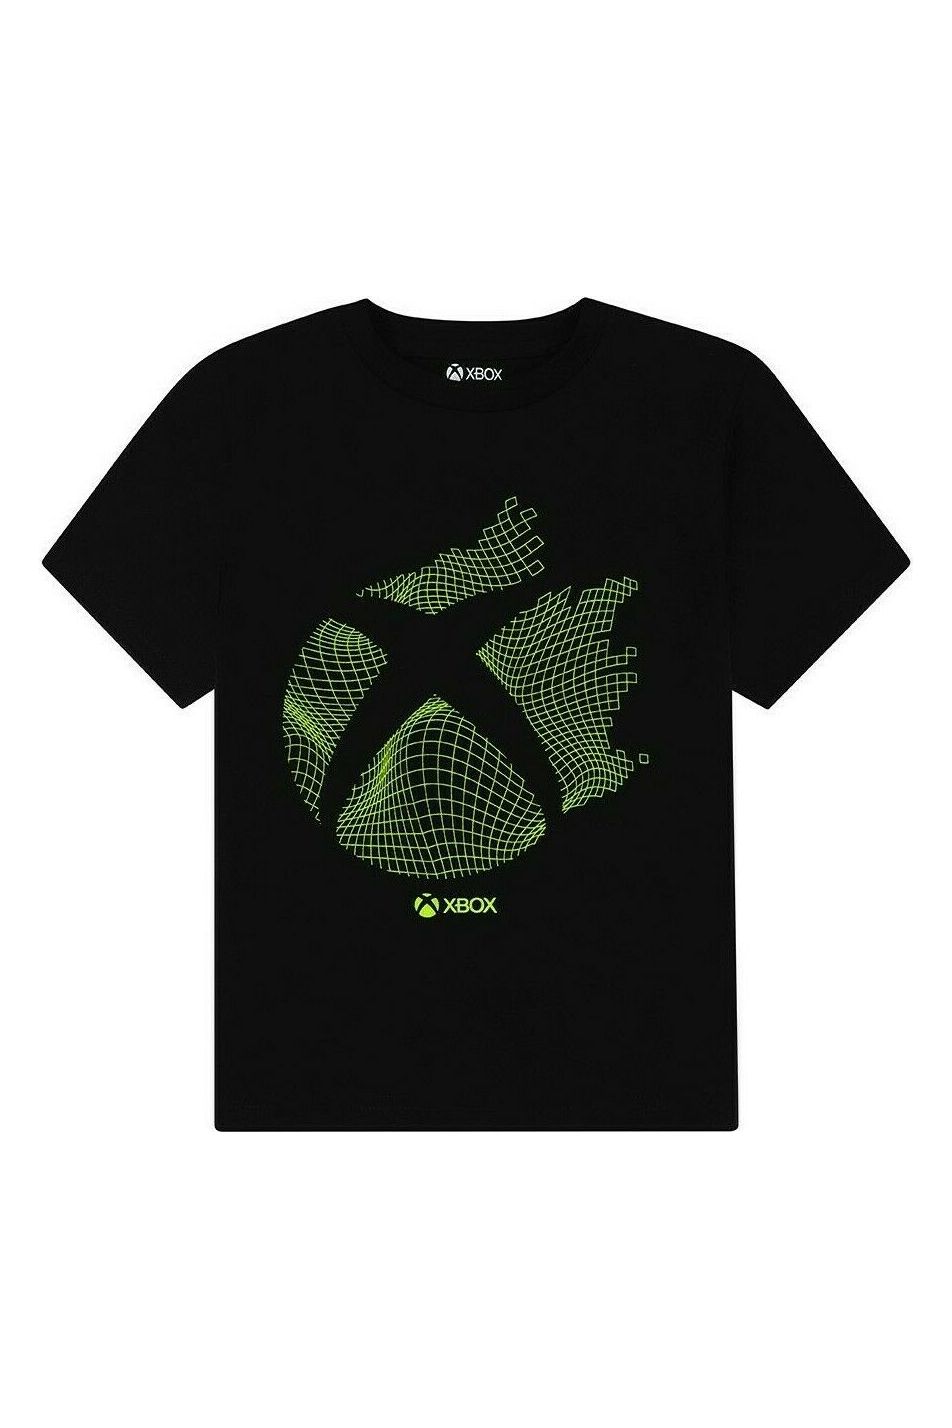 Official Xbox Logo T Shirt